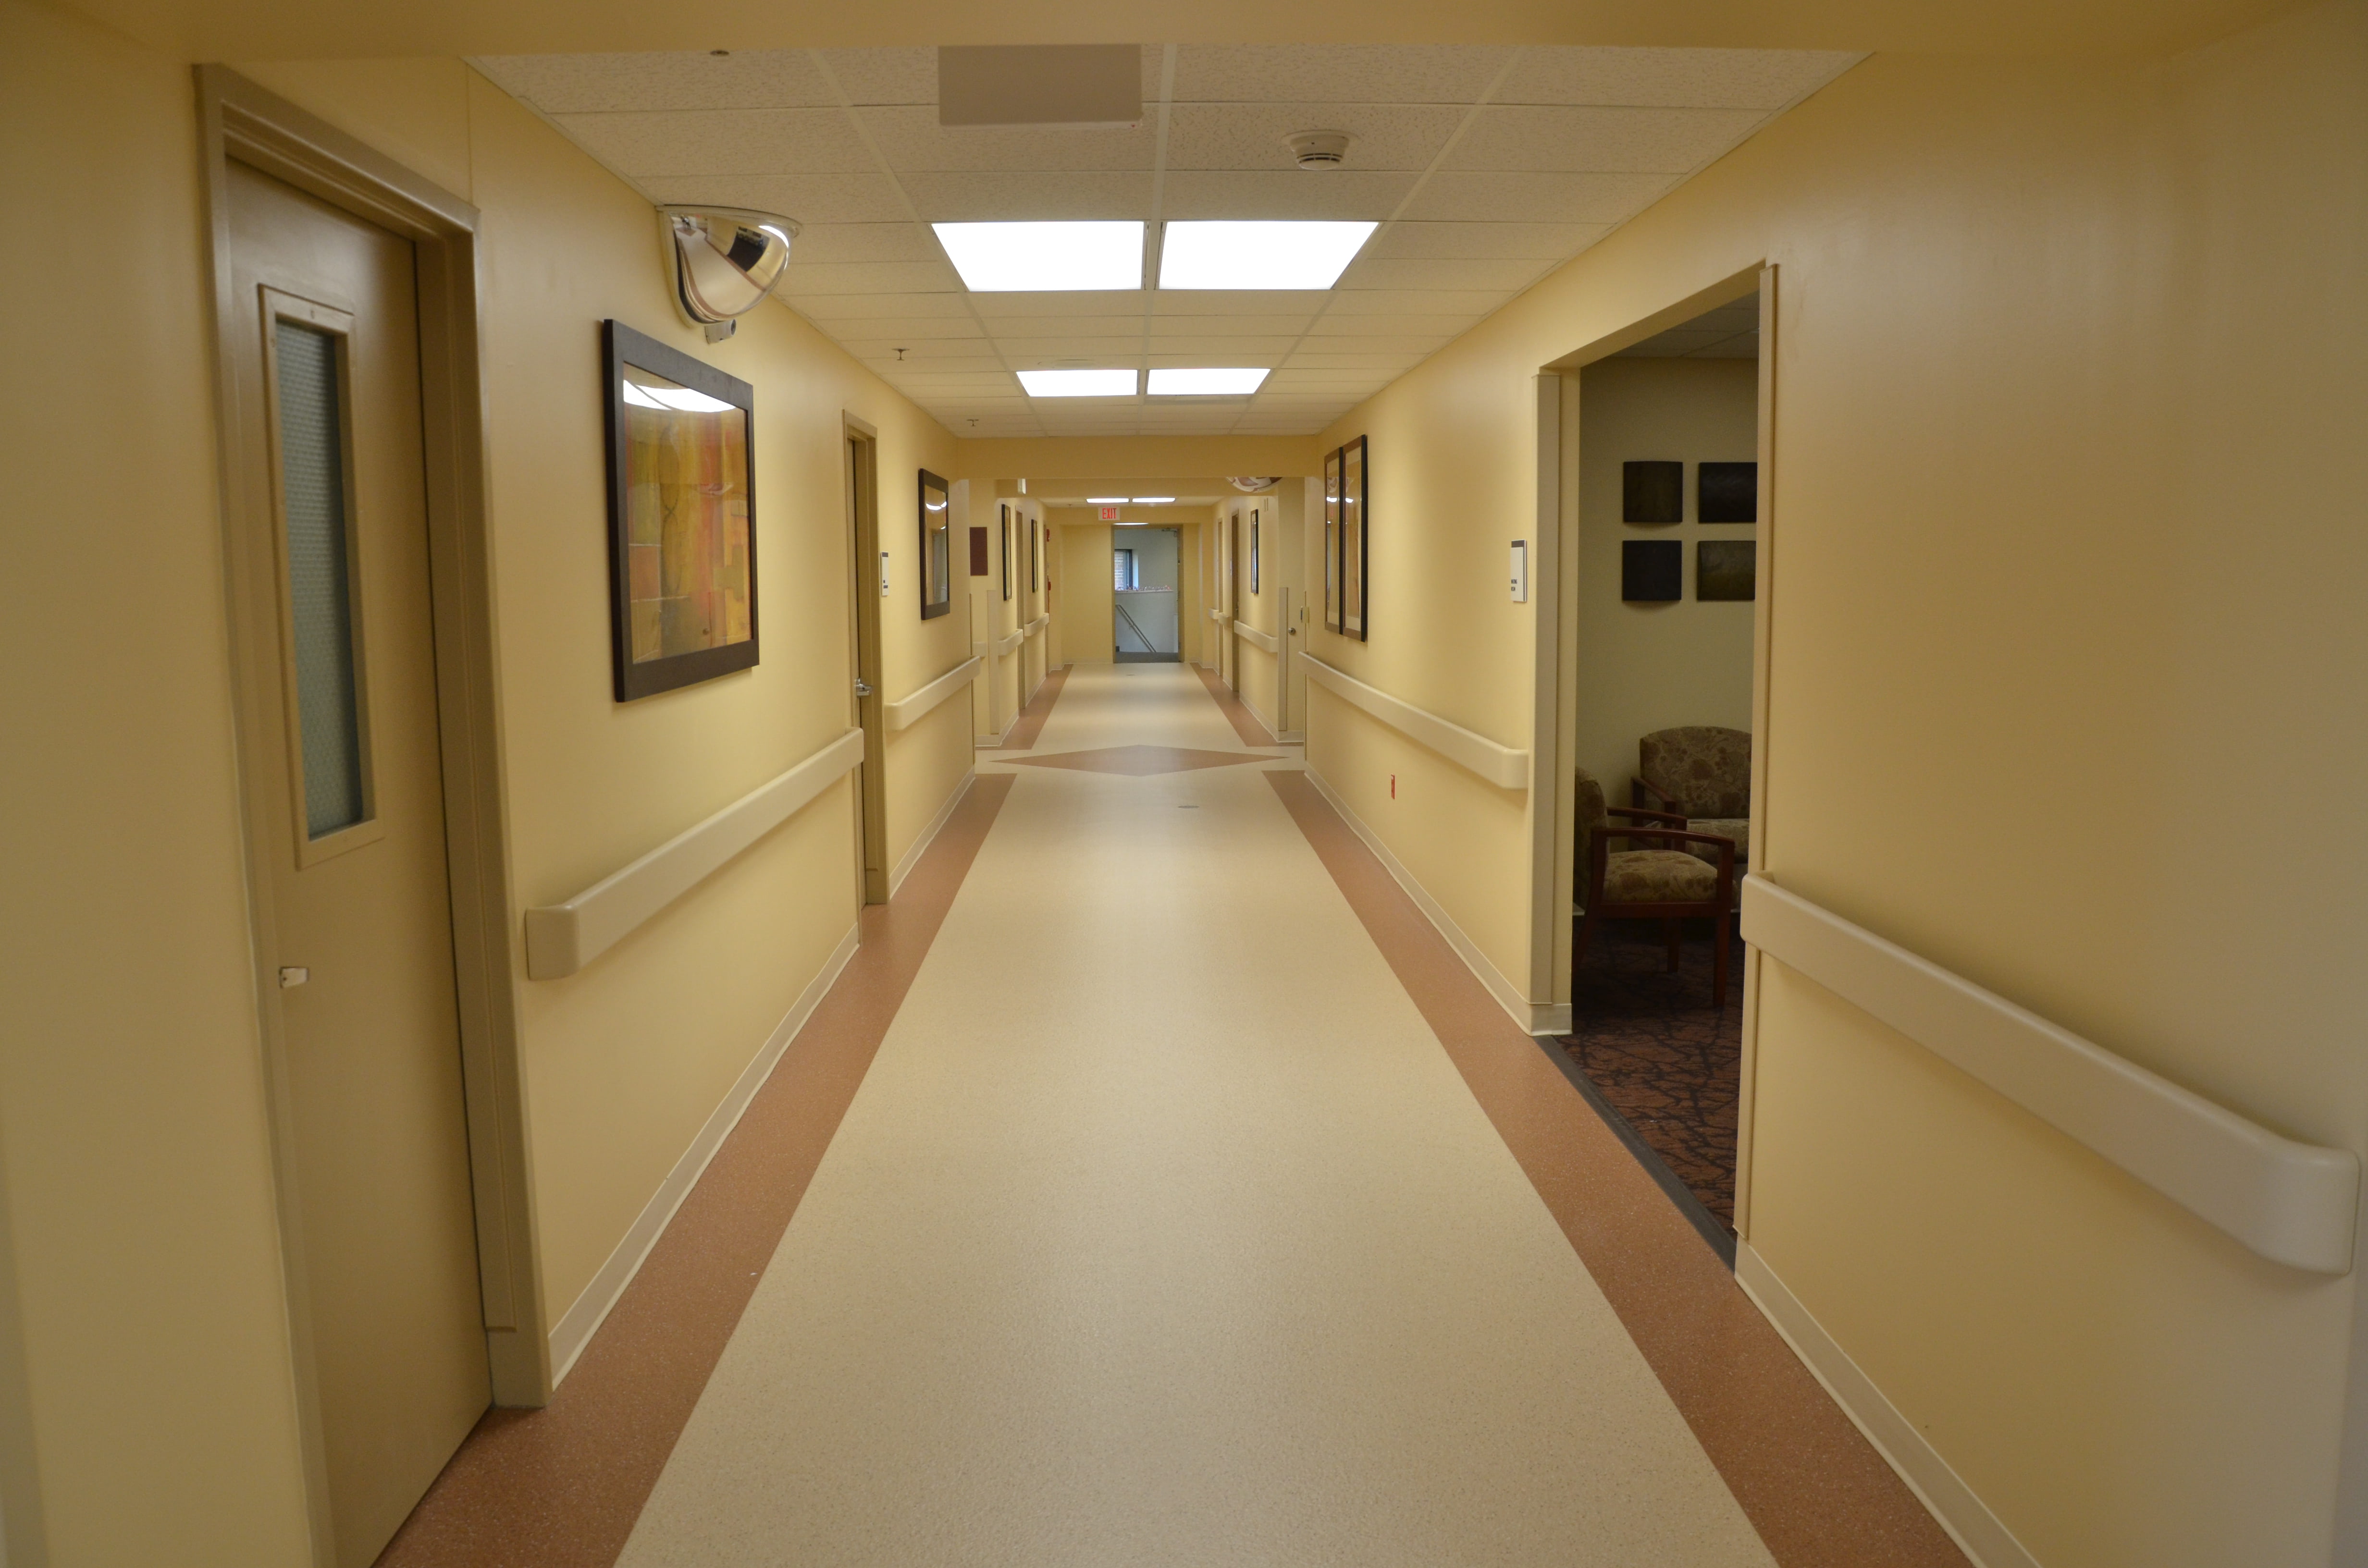 Ministry Flambeau Hospital Emergency Department hallway